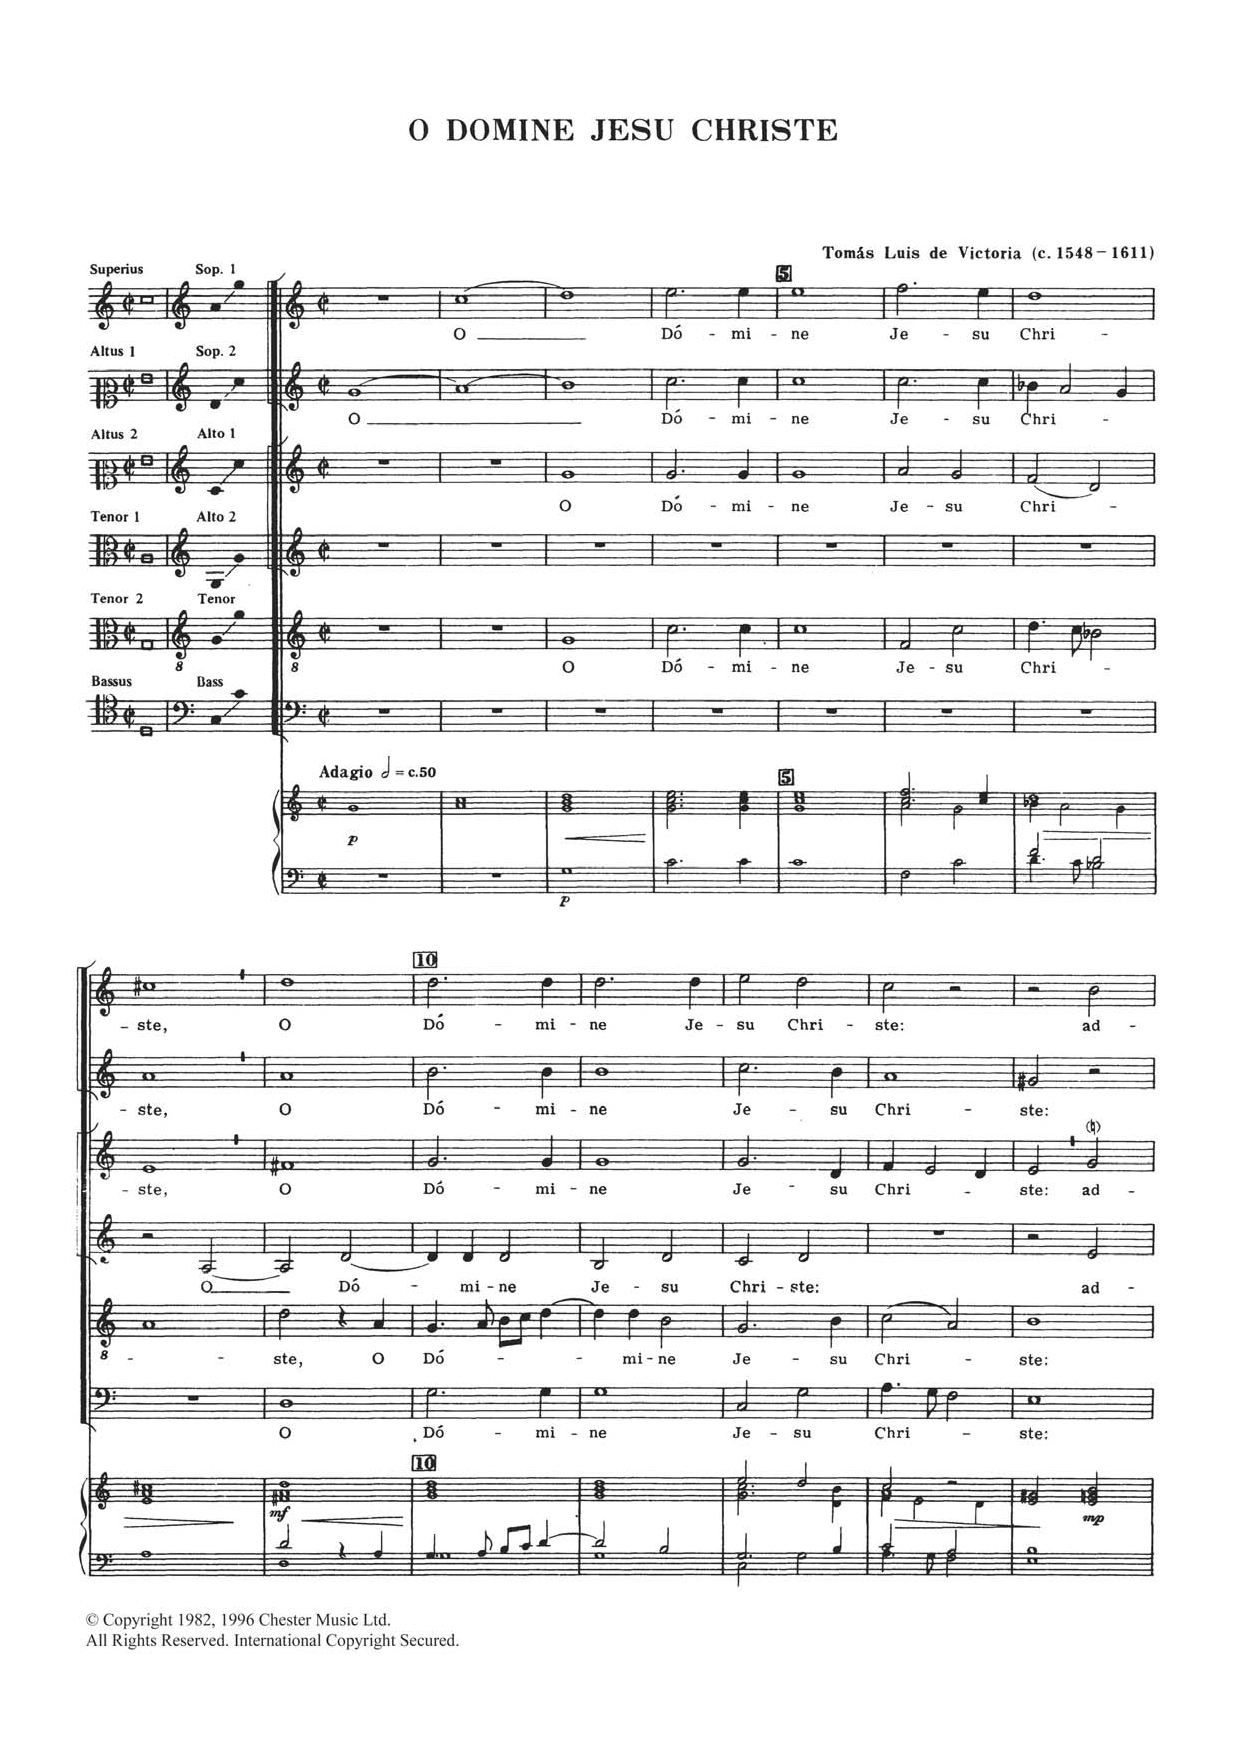 Tomas Luis De Victoria O Domine Jesu Christe Sheet Music Notes & Chords for Choral SAATB - Download or Print PDF